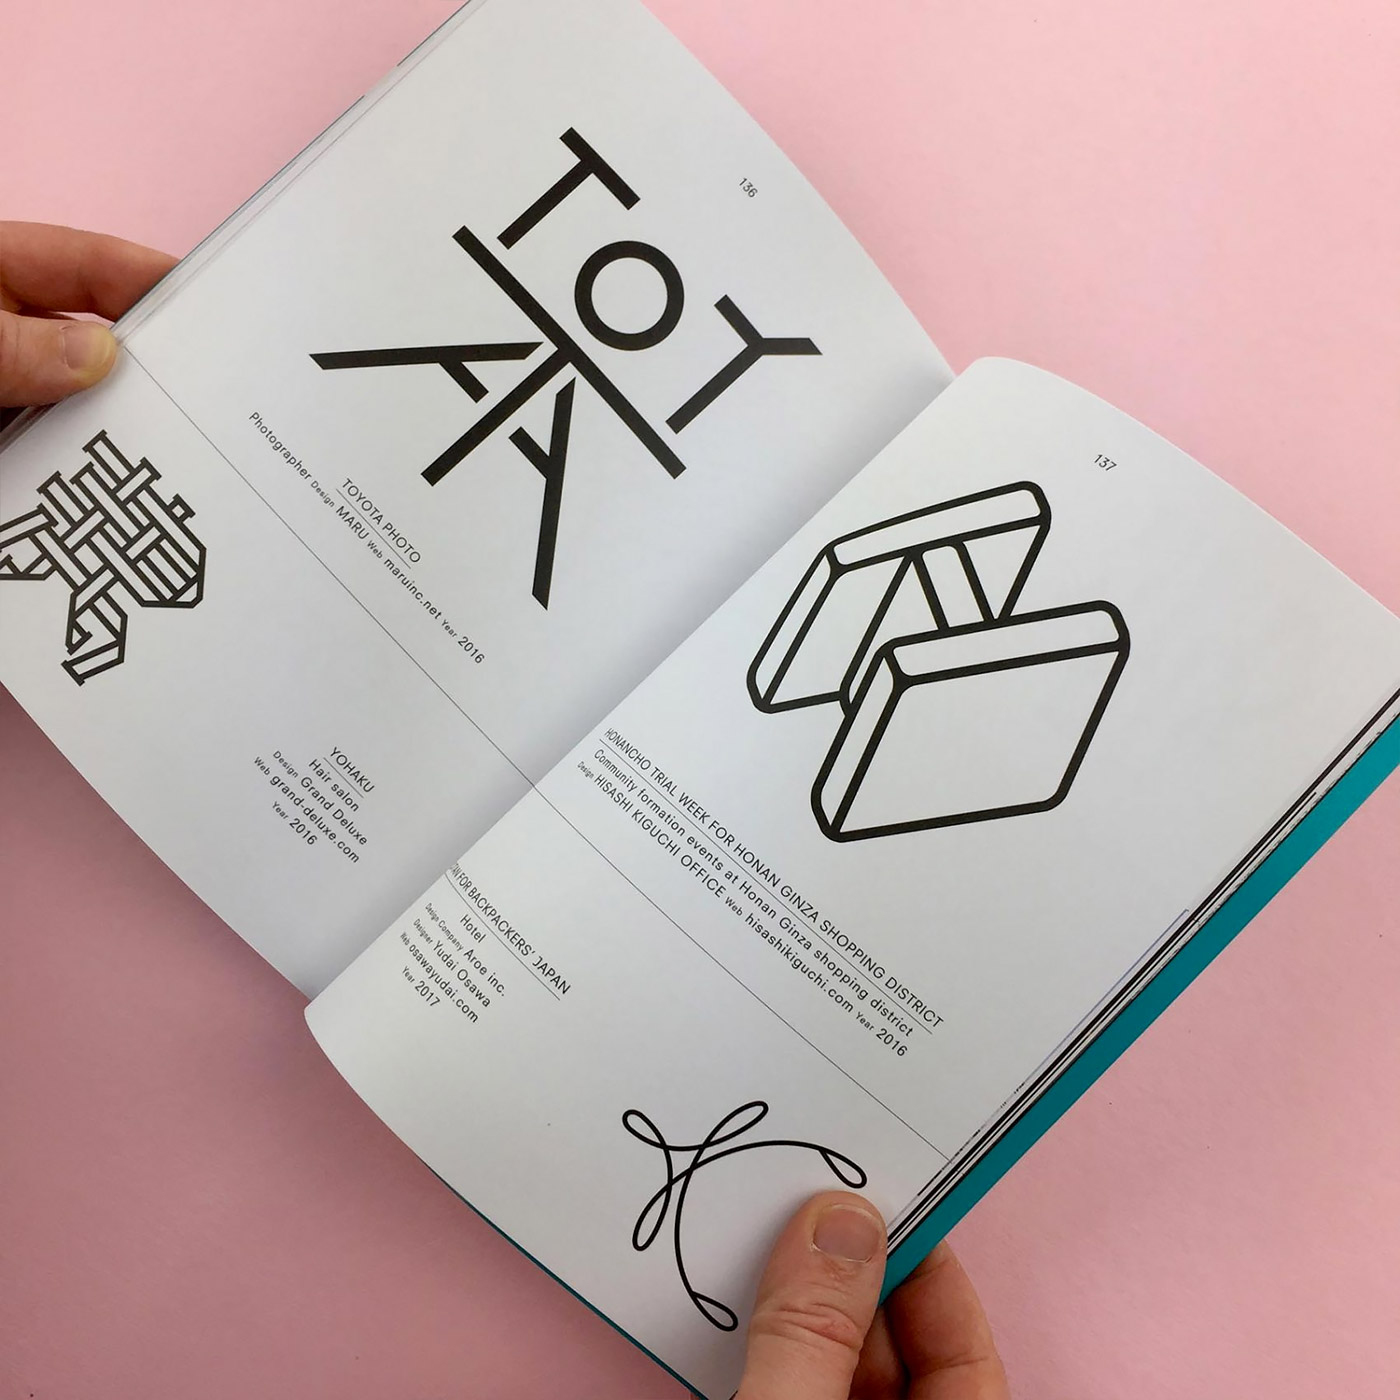 Japanese Logo Design Book Kanji Hiragana Katakana from Japan